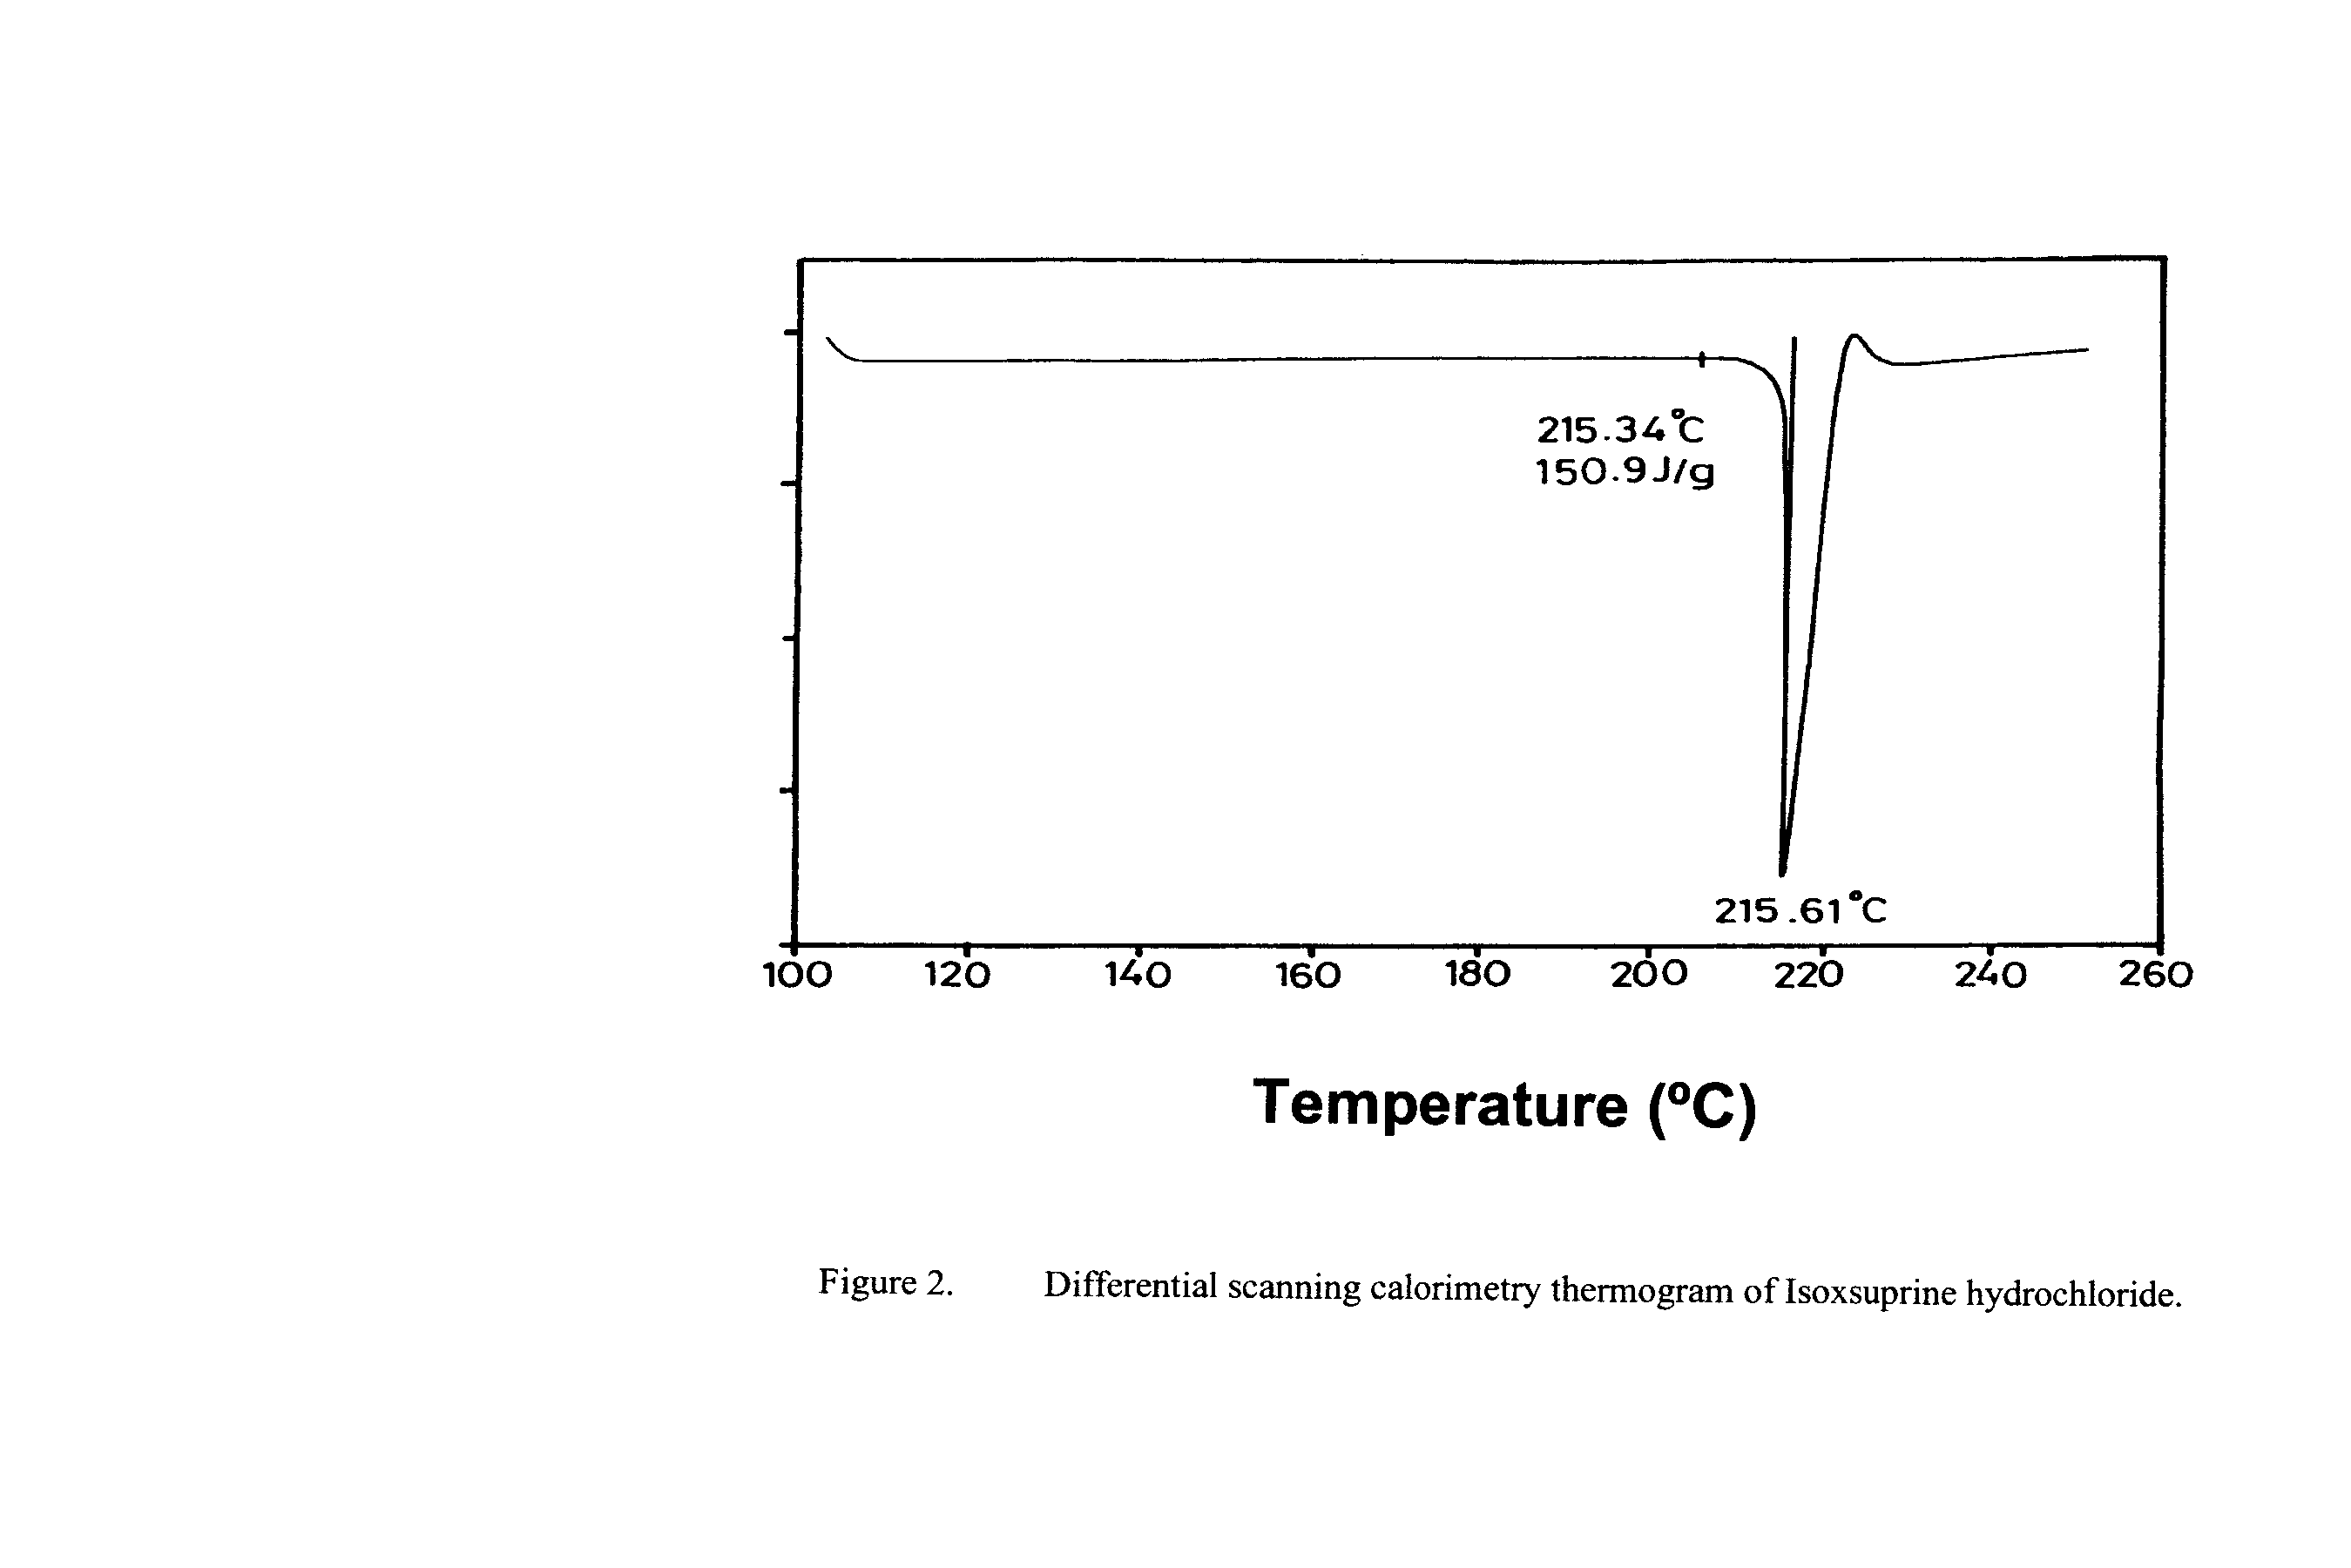 Figure 2. Differential scanning calorimetry thermogram of Isoxsuprine hydrochloride.